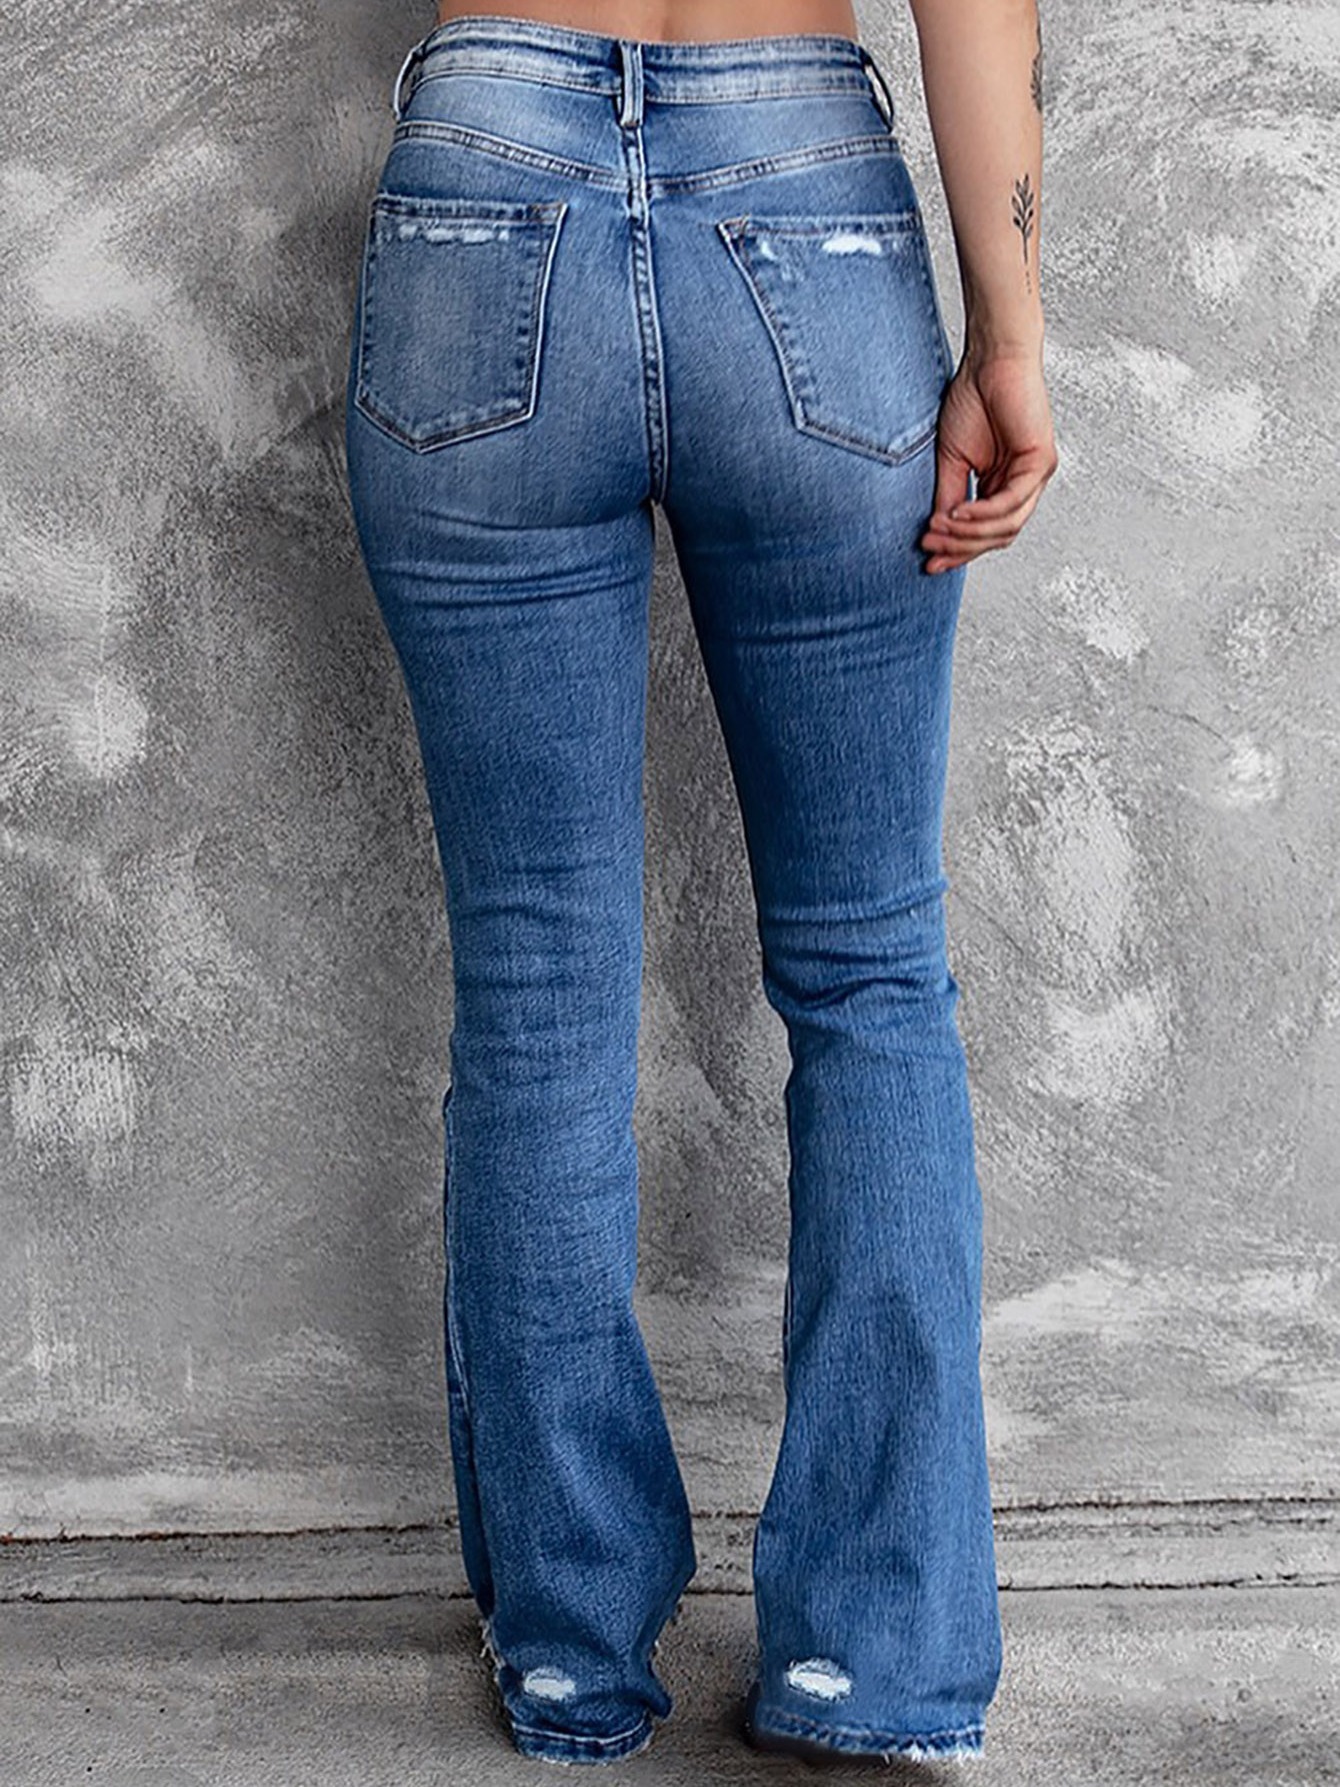 Women's Flare Jeans High Waist Bell Bottom Raw Hem Denim Pants